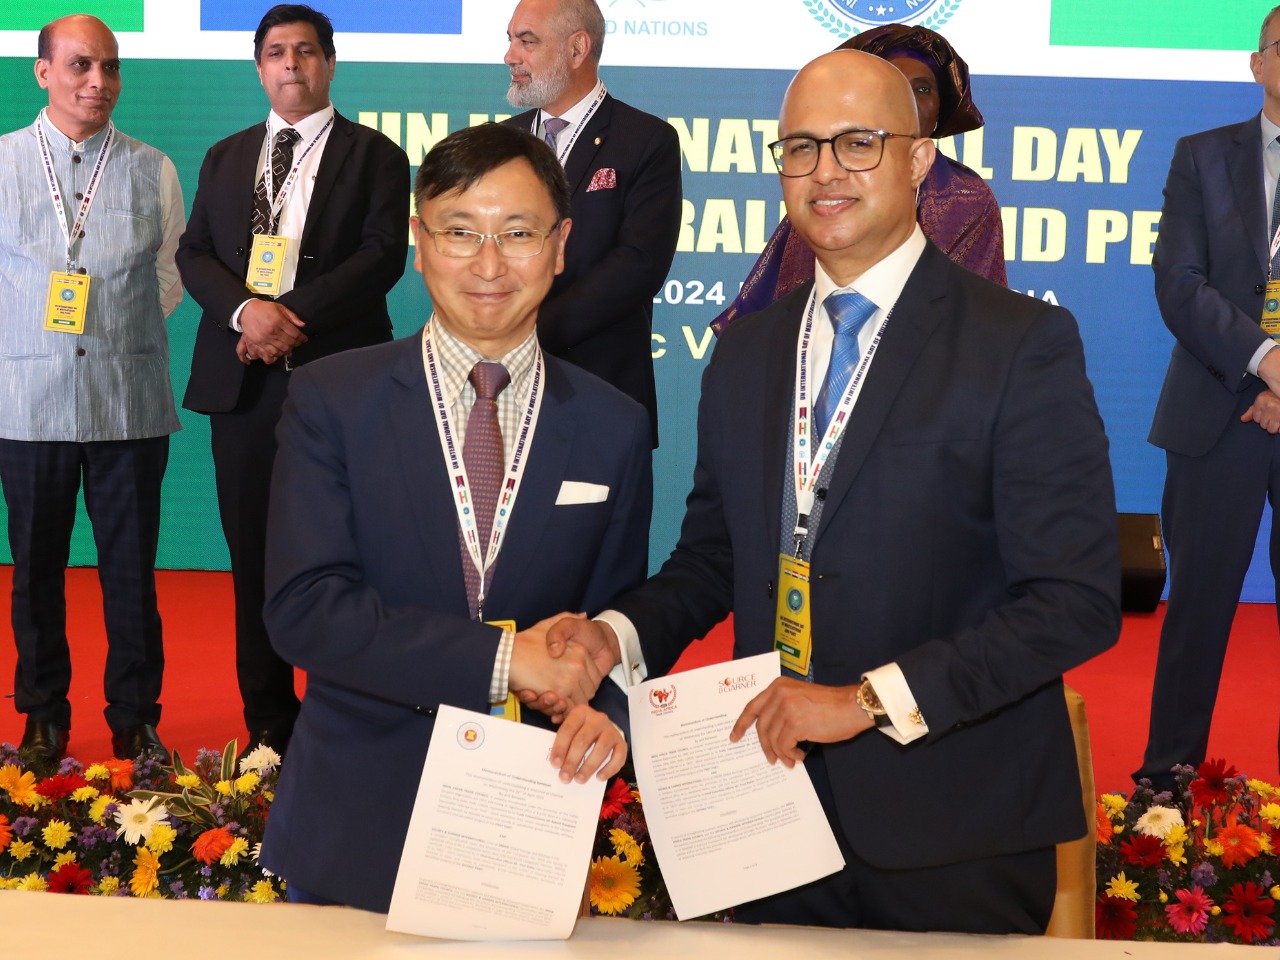 Indian Economic Trade Organization (IETO) and Global Lobby and Trade Association (GLATA) Forge Strategic Partnership